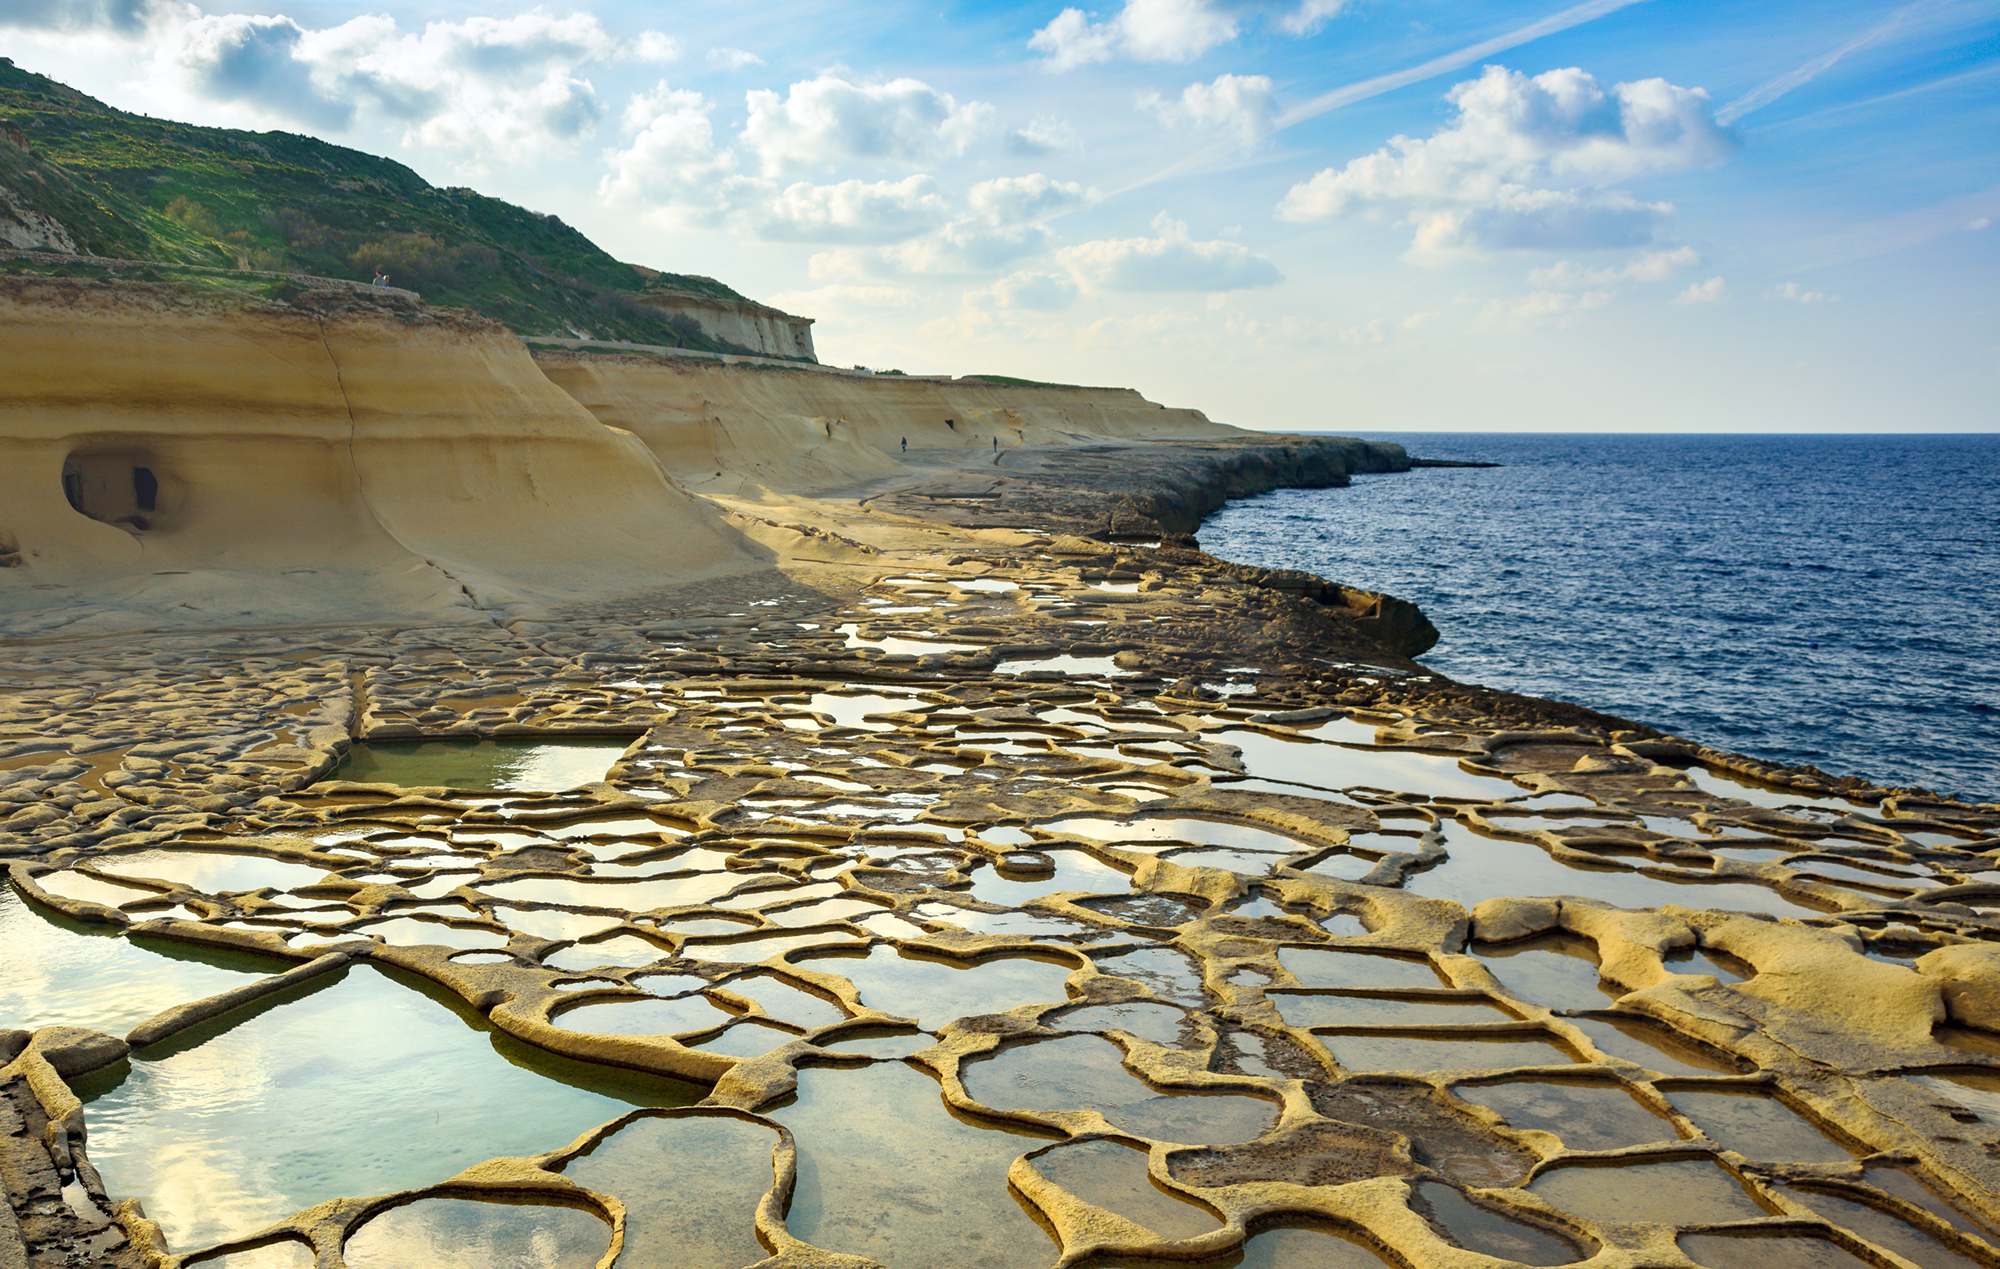 sea salt evaporation pans in malta